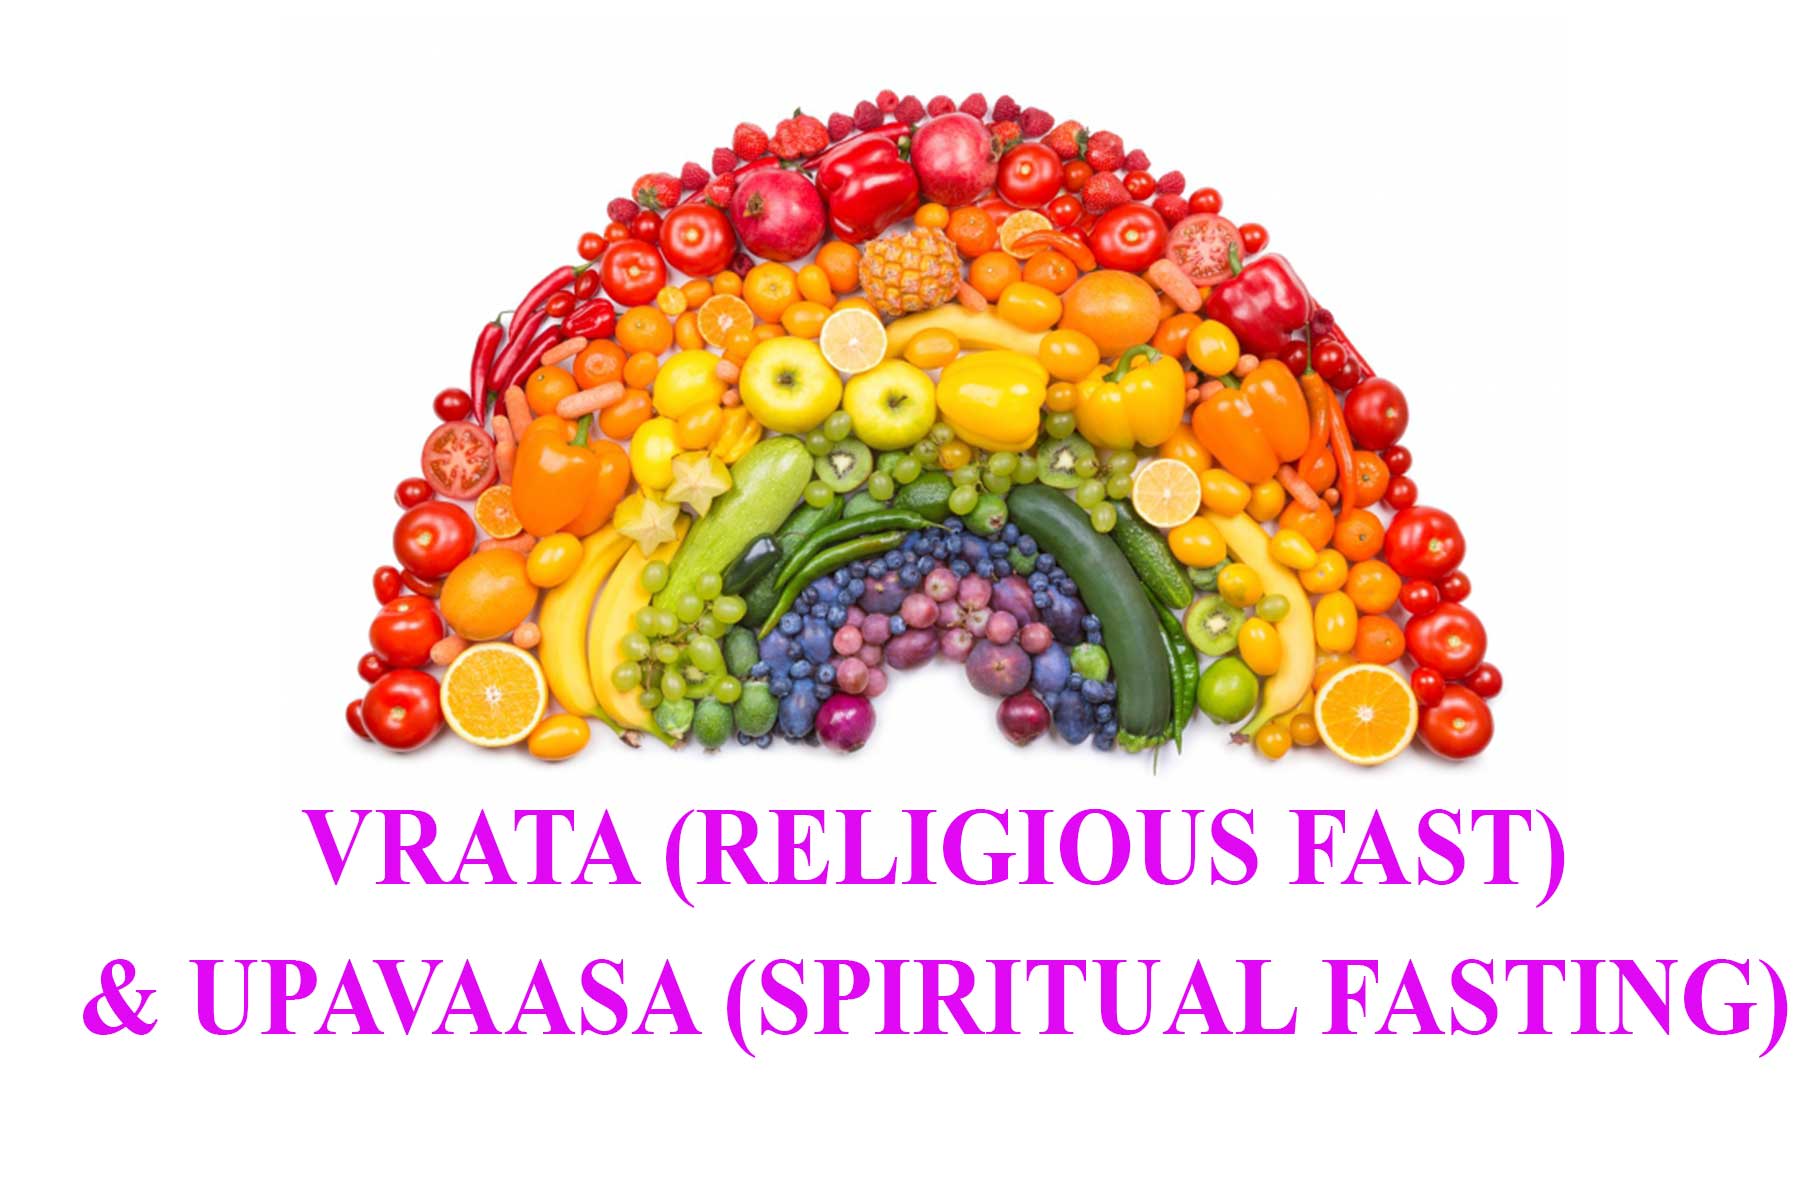 VRATA (RELIGIOUS FAST) & UPAVAASA (SPIRITUAL FASTING)